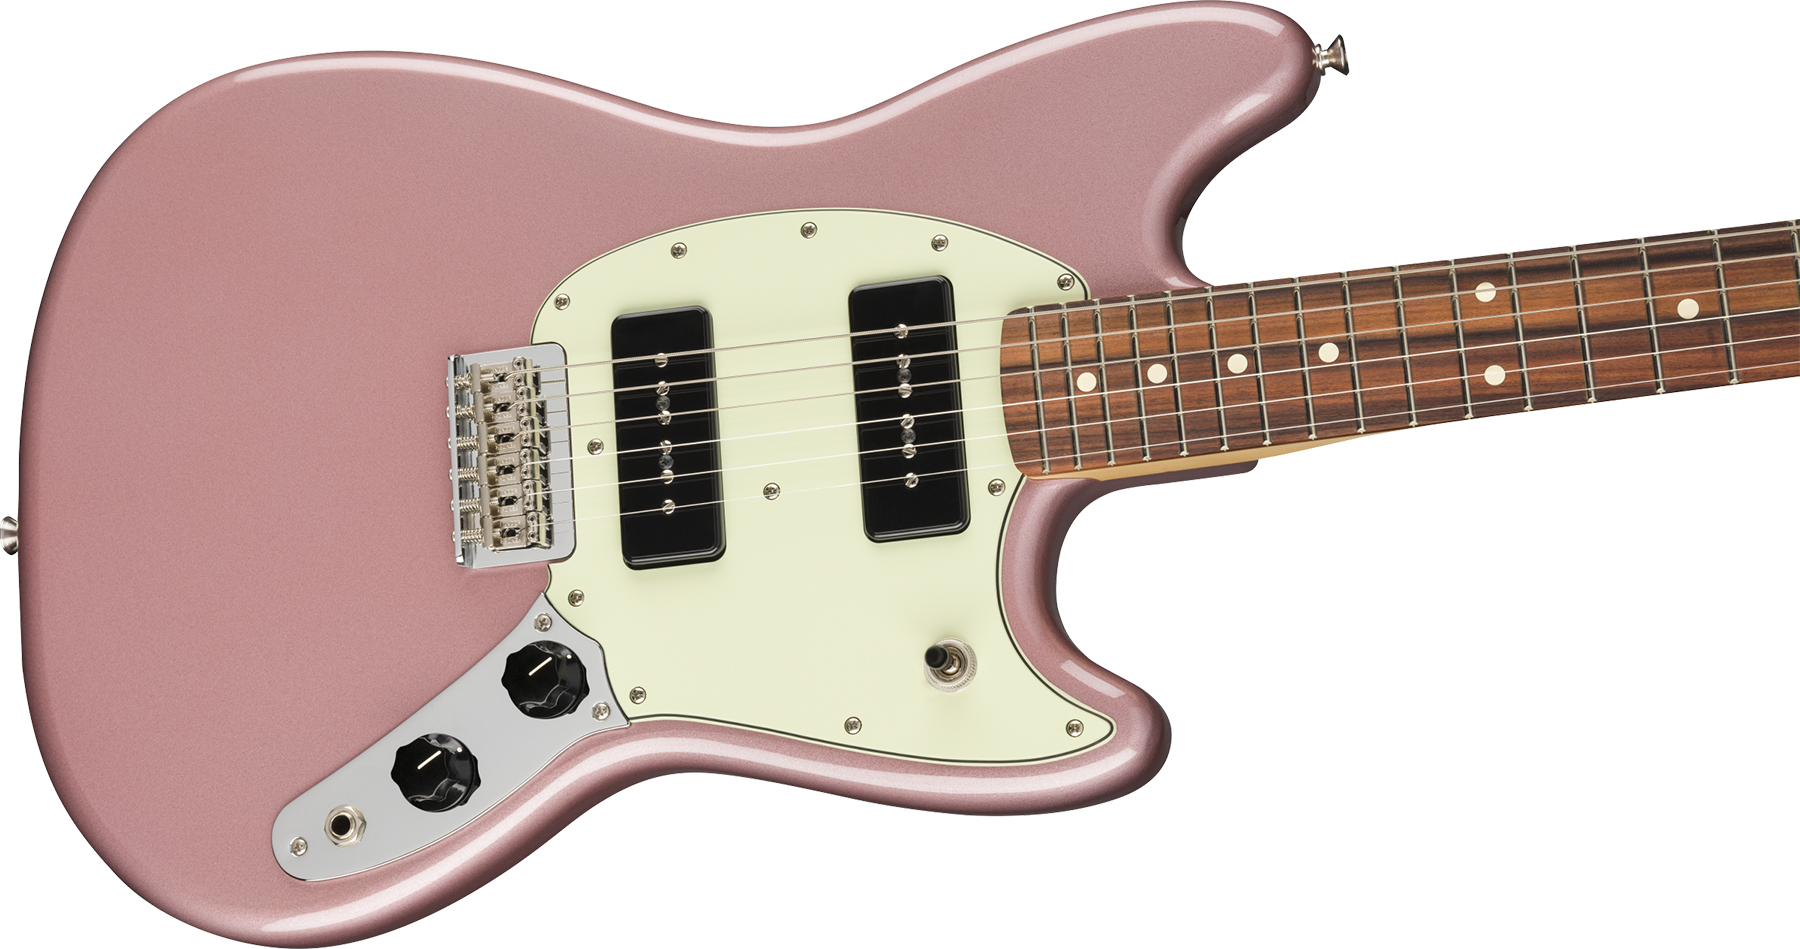 Fender Mustang Player 90 Mex Ht 2p90 Pf - Burgundy Mist Metallic - Guitarra electrica retro rock - Variation 2